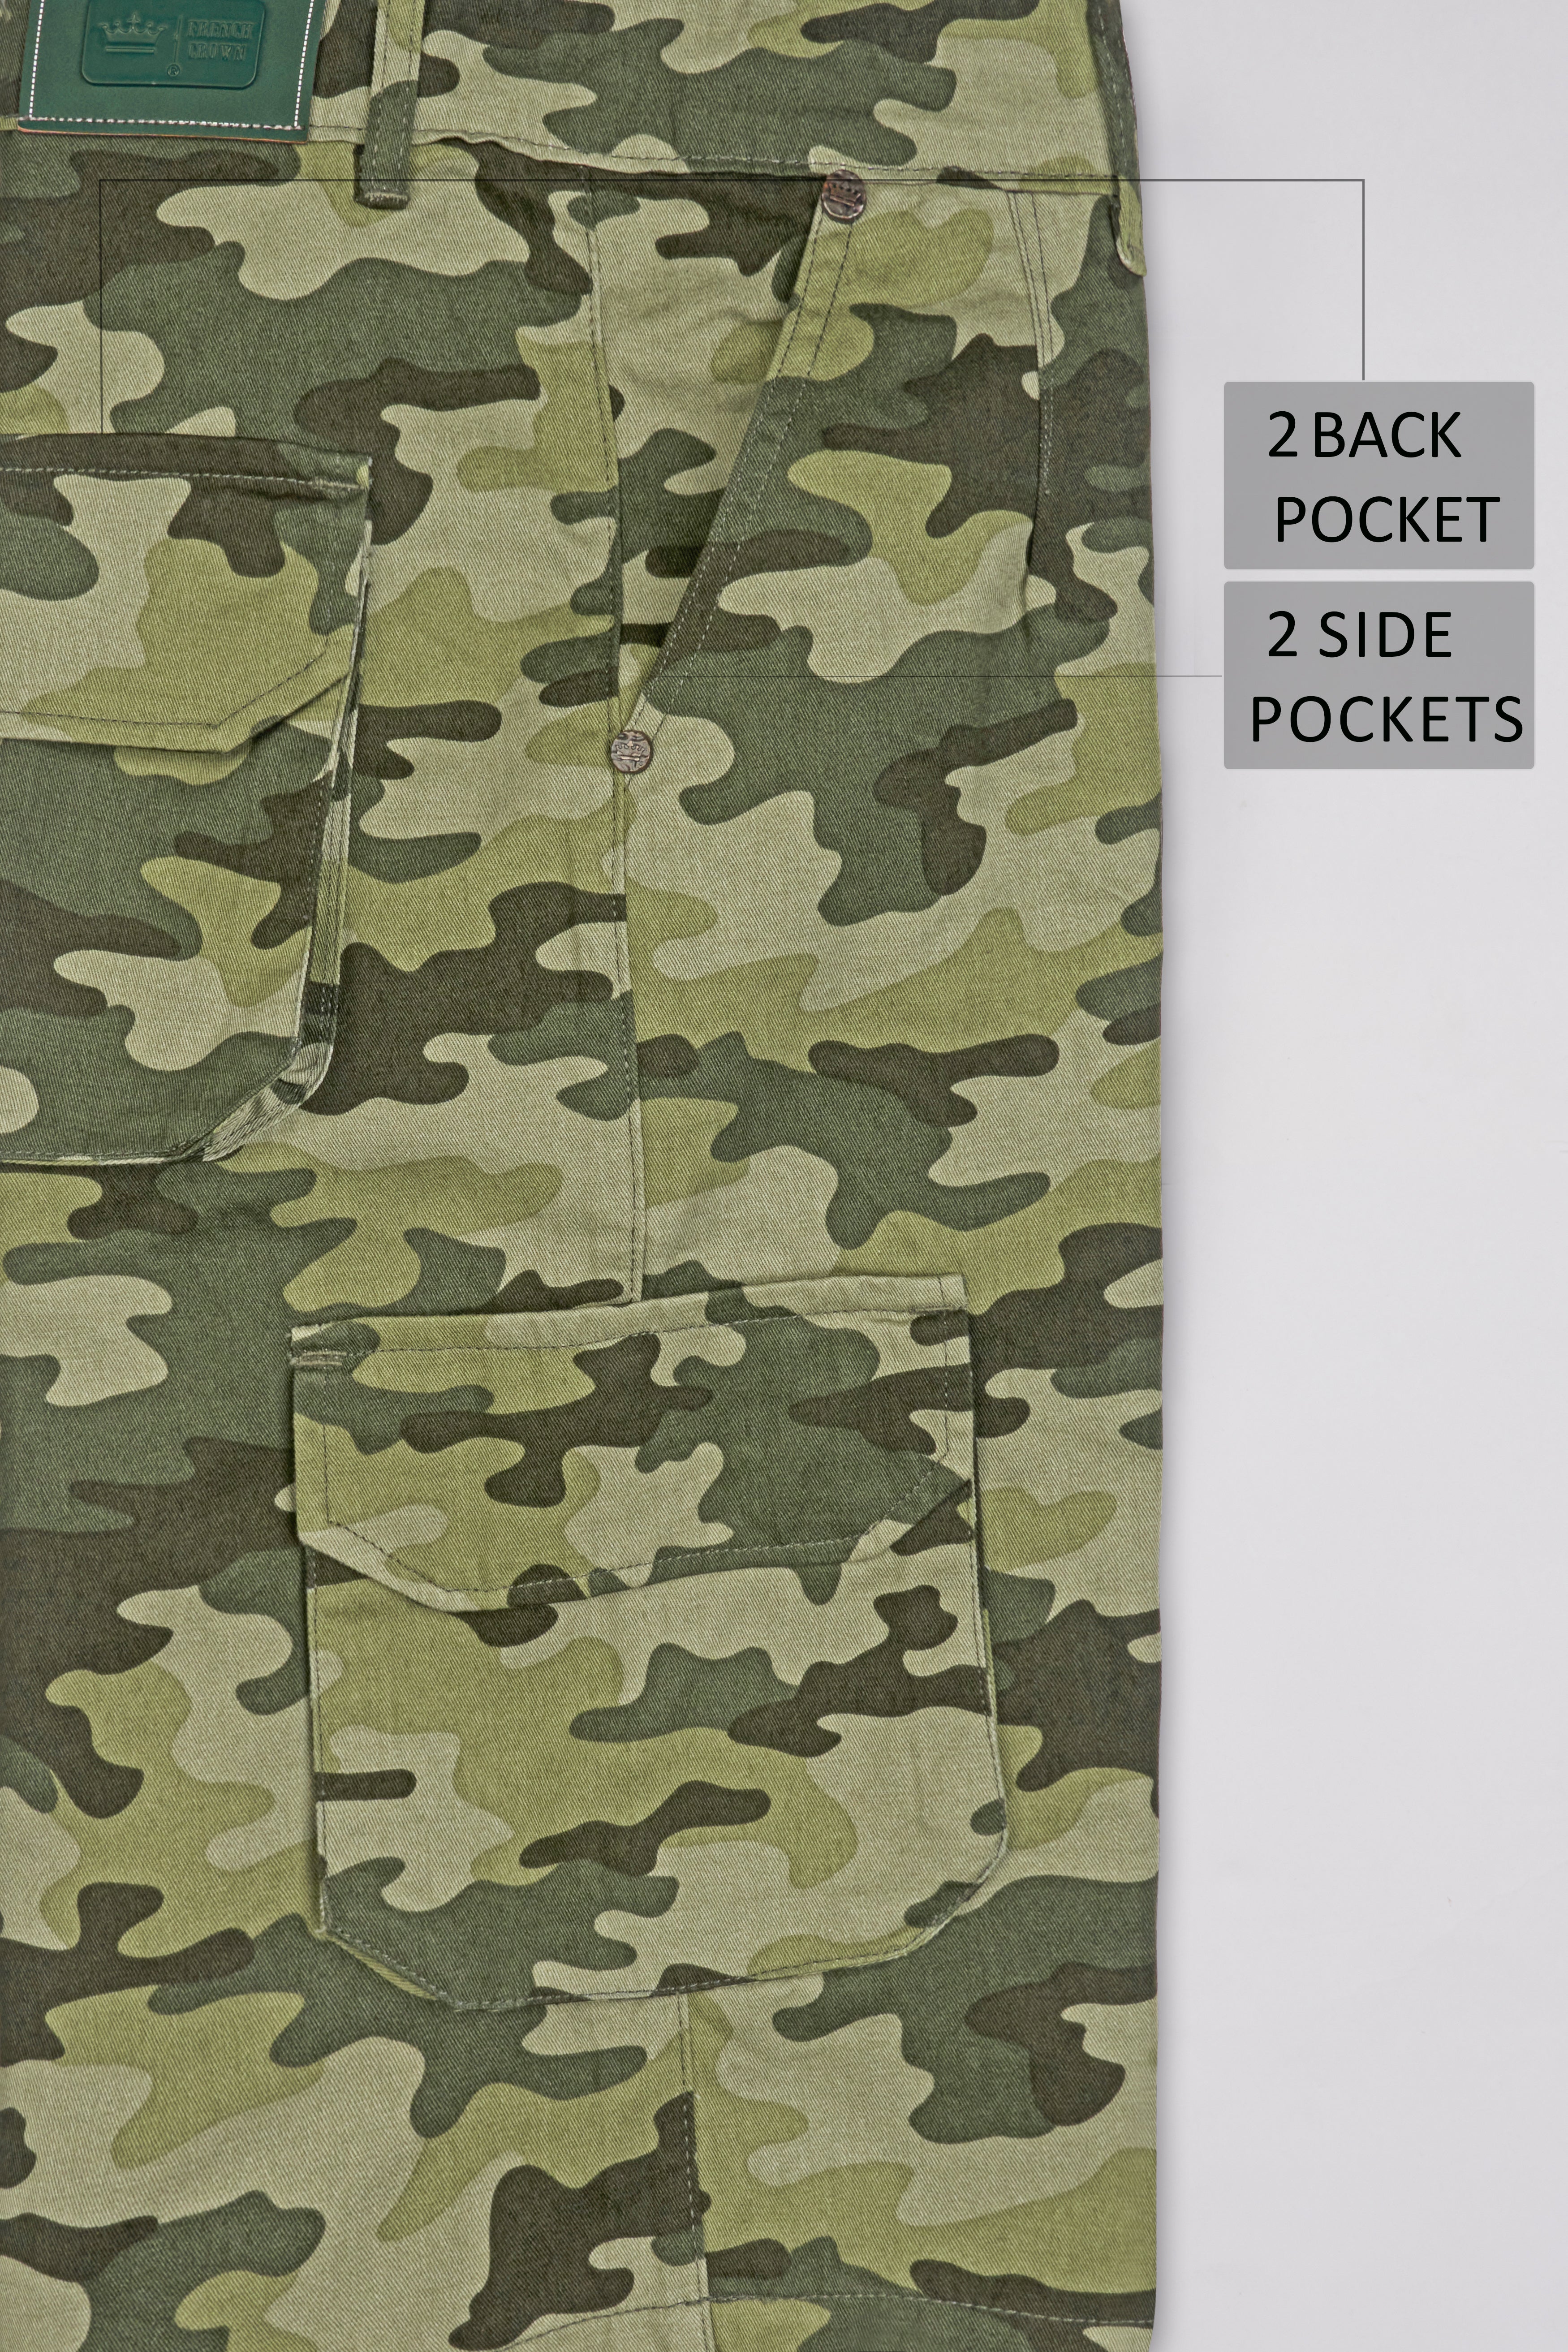 Hillary Beige with Hemlock Green Camouflage Cargo Shorts SR273-28, SR273-30, SR273-32, SR273-34, SR273-36, SR273-38, SR273-40, SR273-42, SR273-44